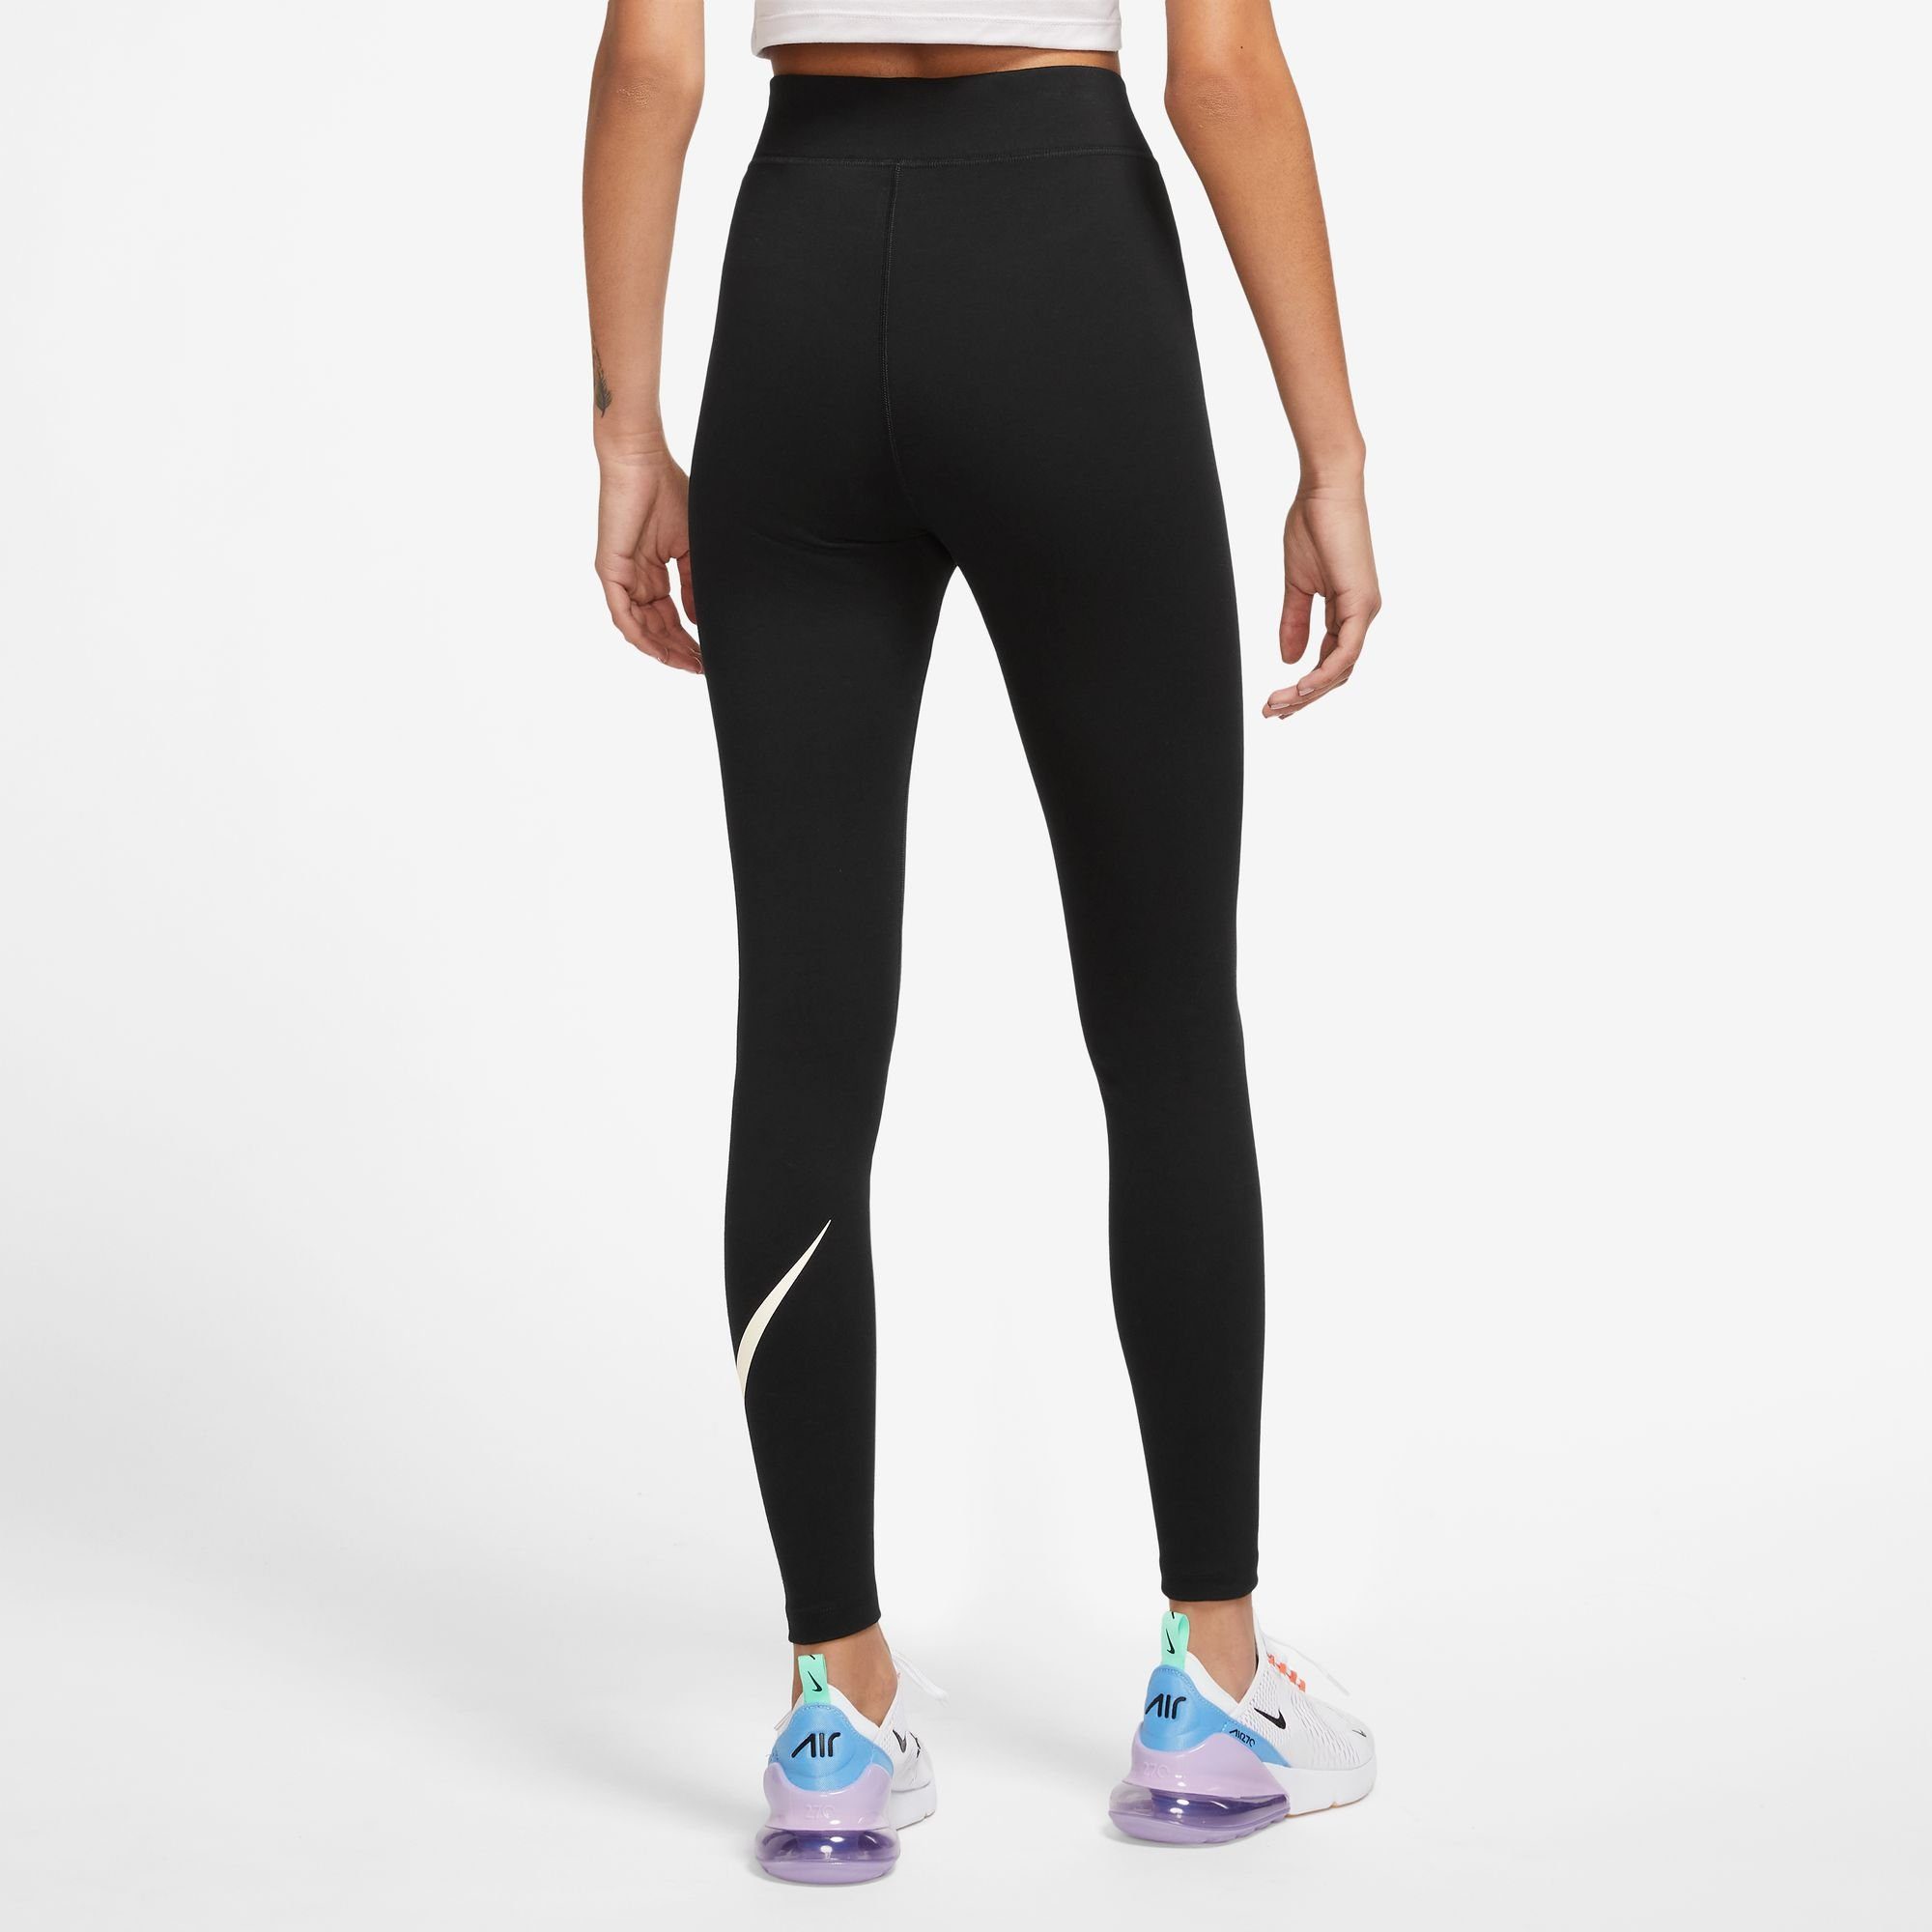 GRAPHIC Nike HIGH-WAISTED CLASSICS Leggings WOMEN'S LEGGINGS BLACK/SAIL Sportswear